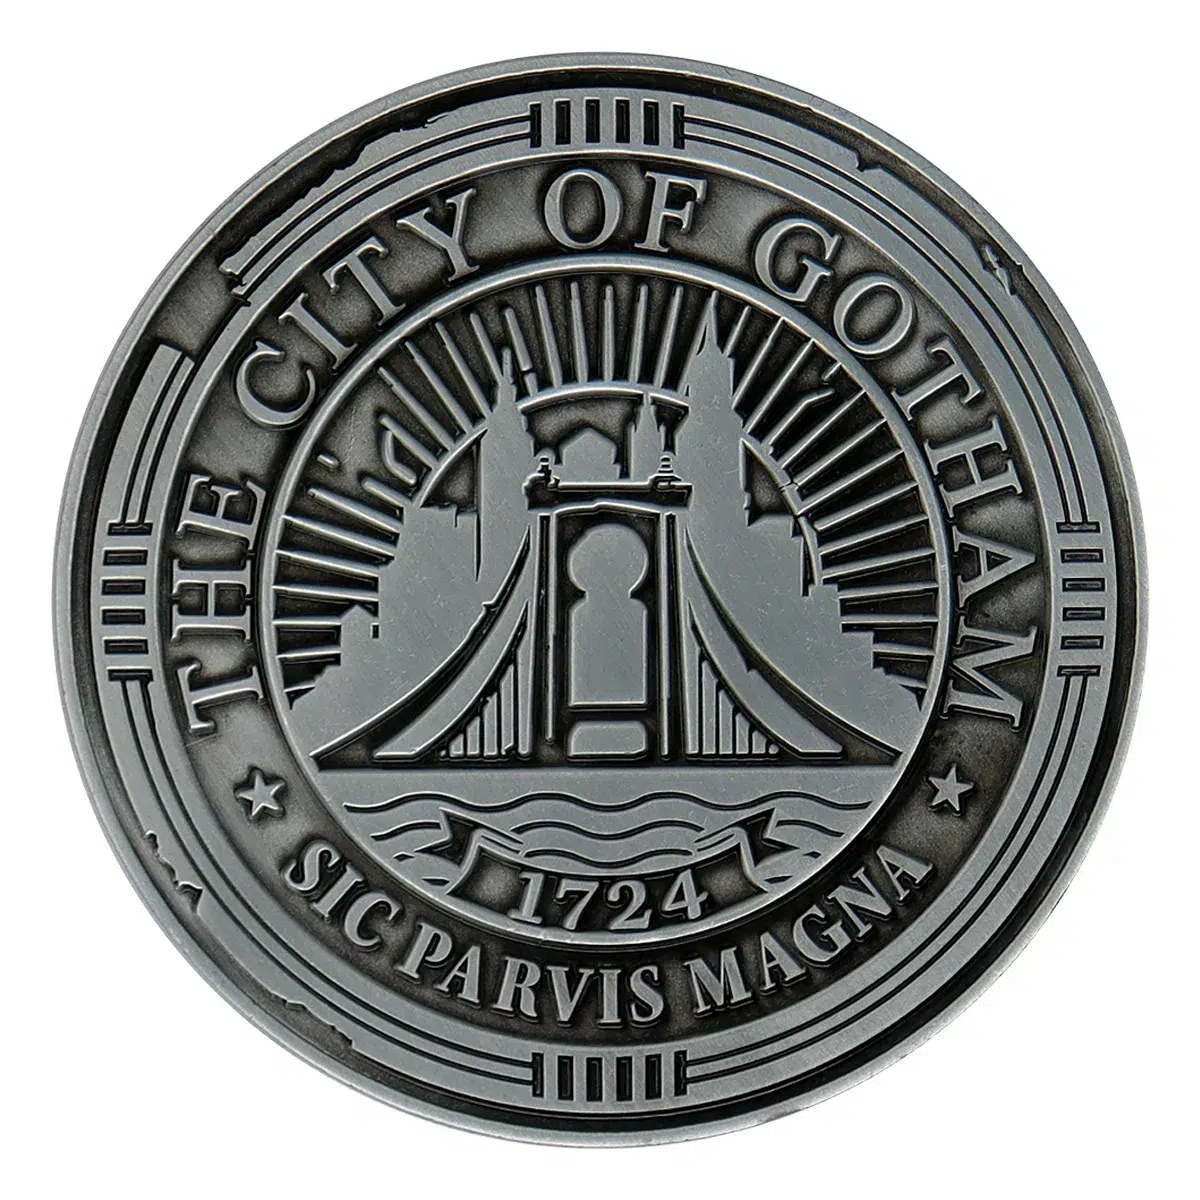 Gotham Collectible Coin